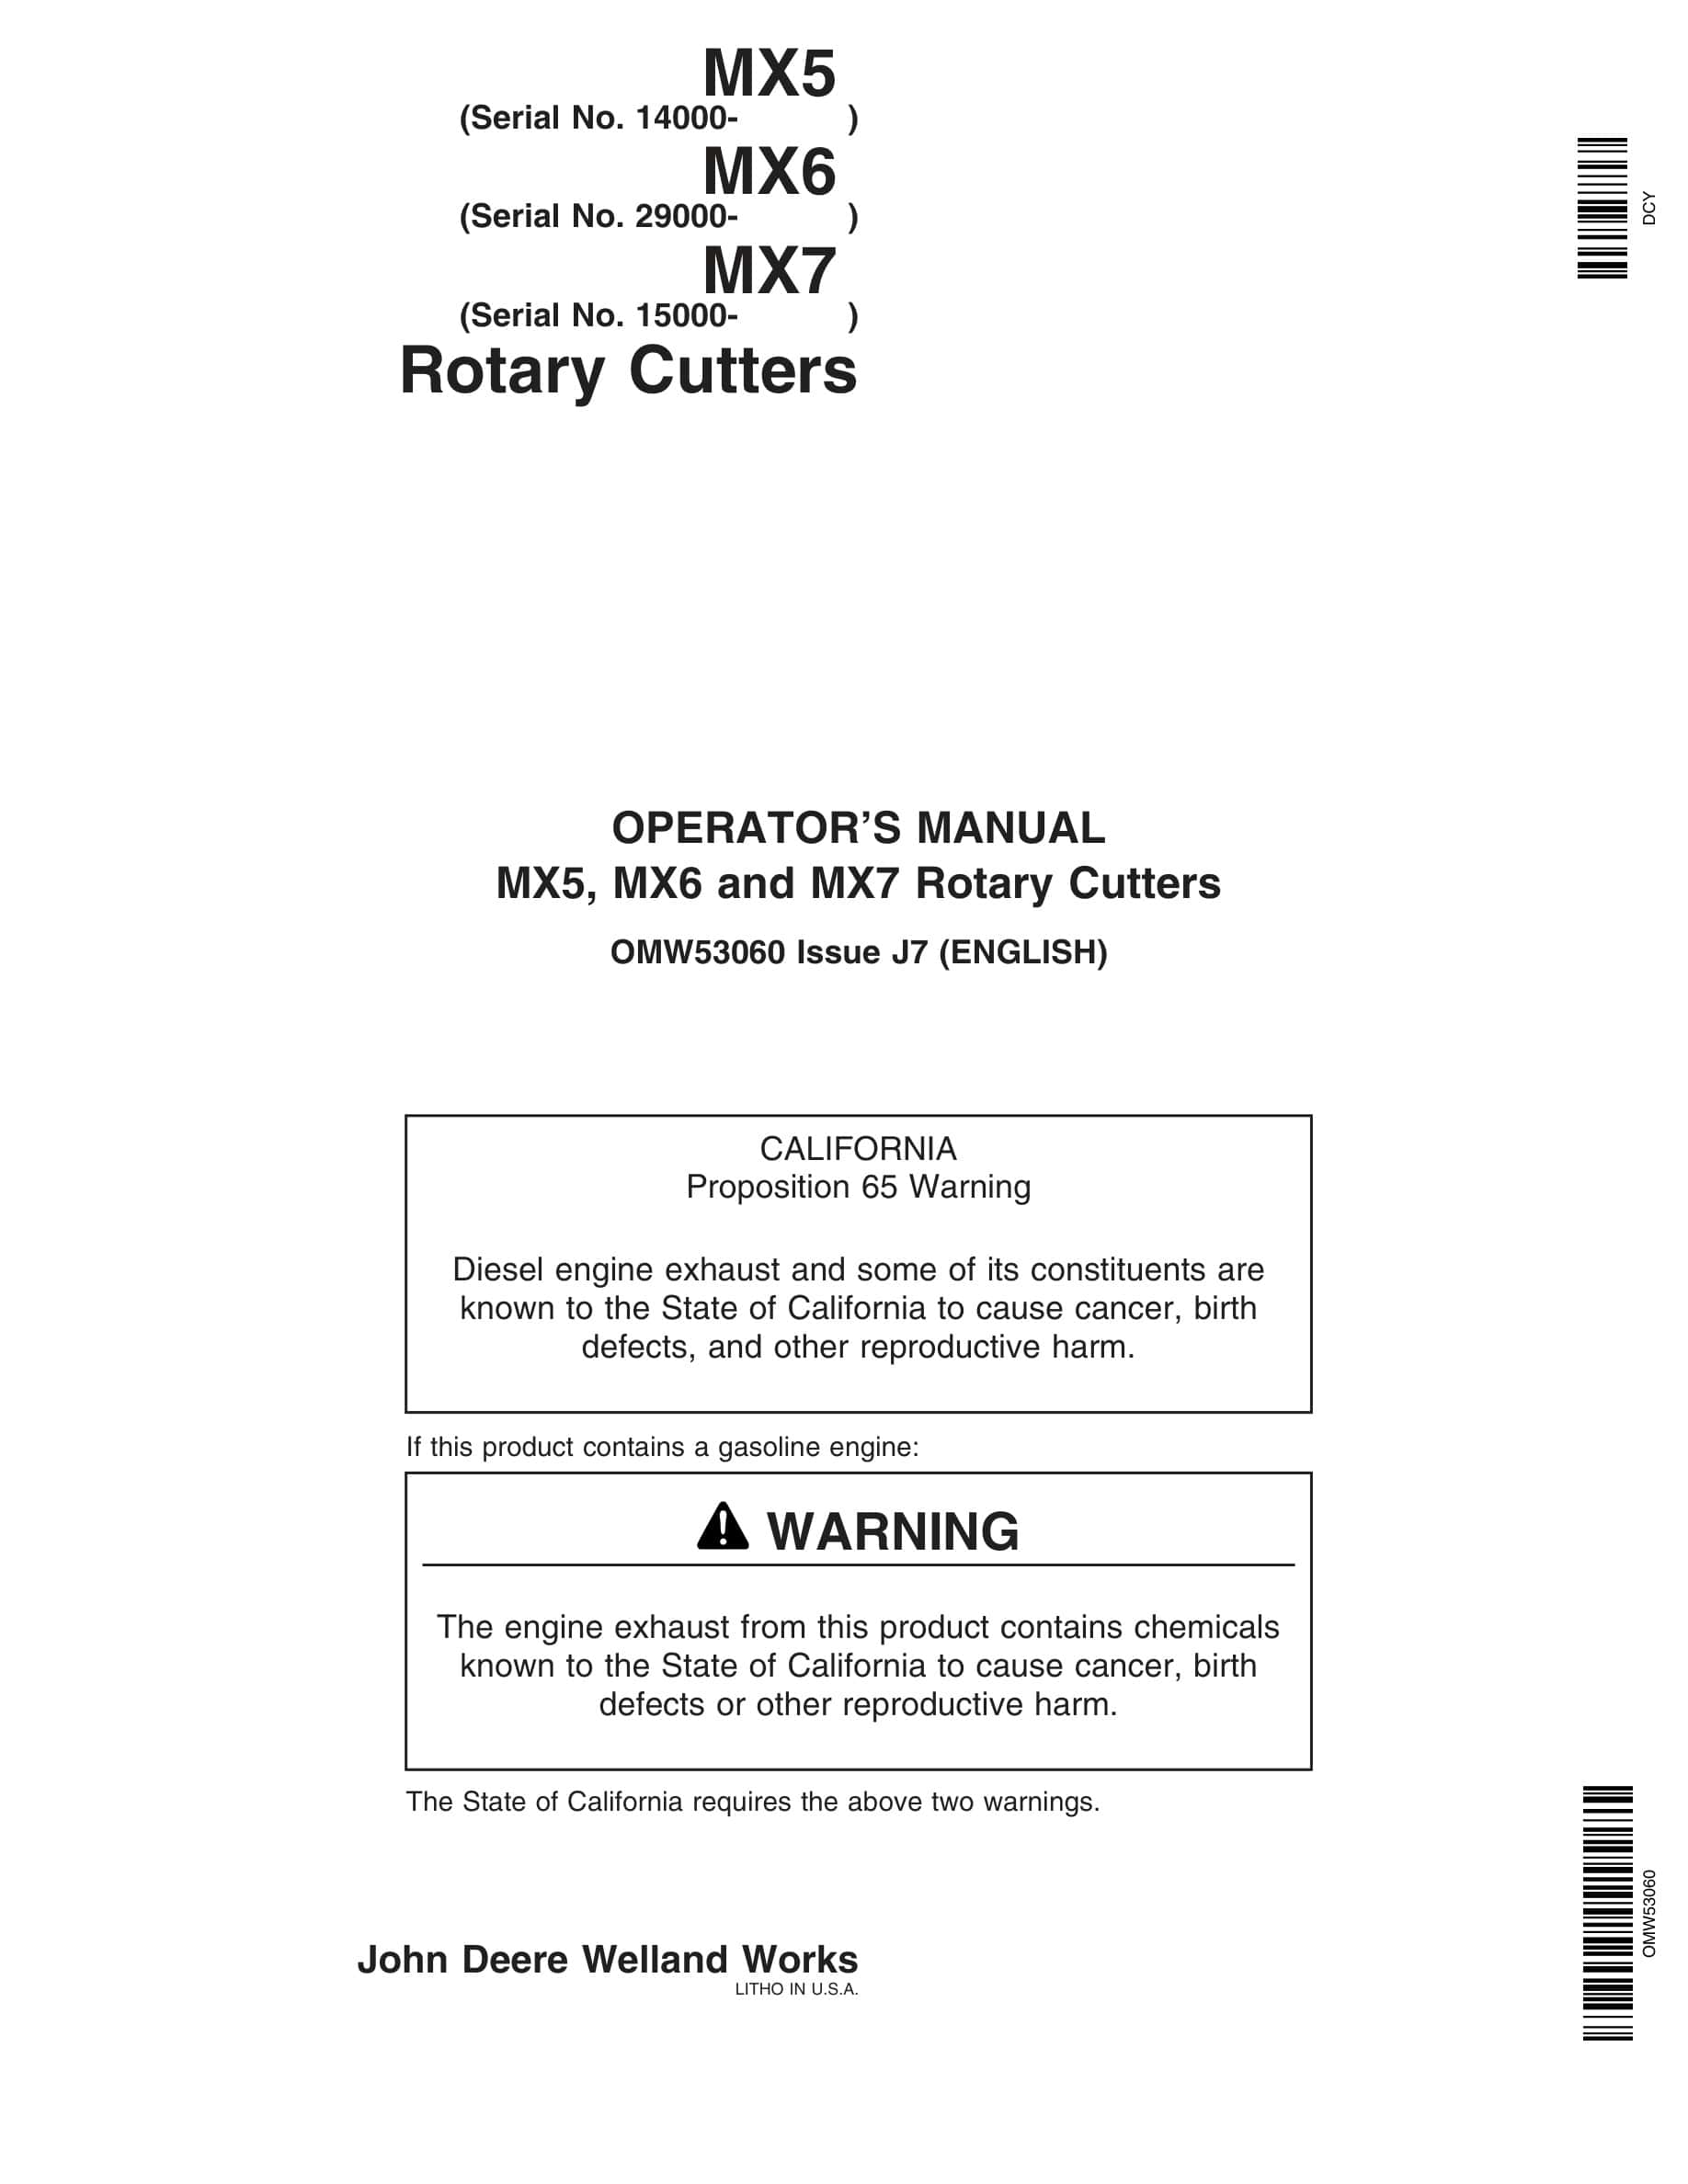 John Deere MX5, MX6 and MX7 Rotary Cutter Operator Manual OMW53060-1